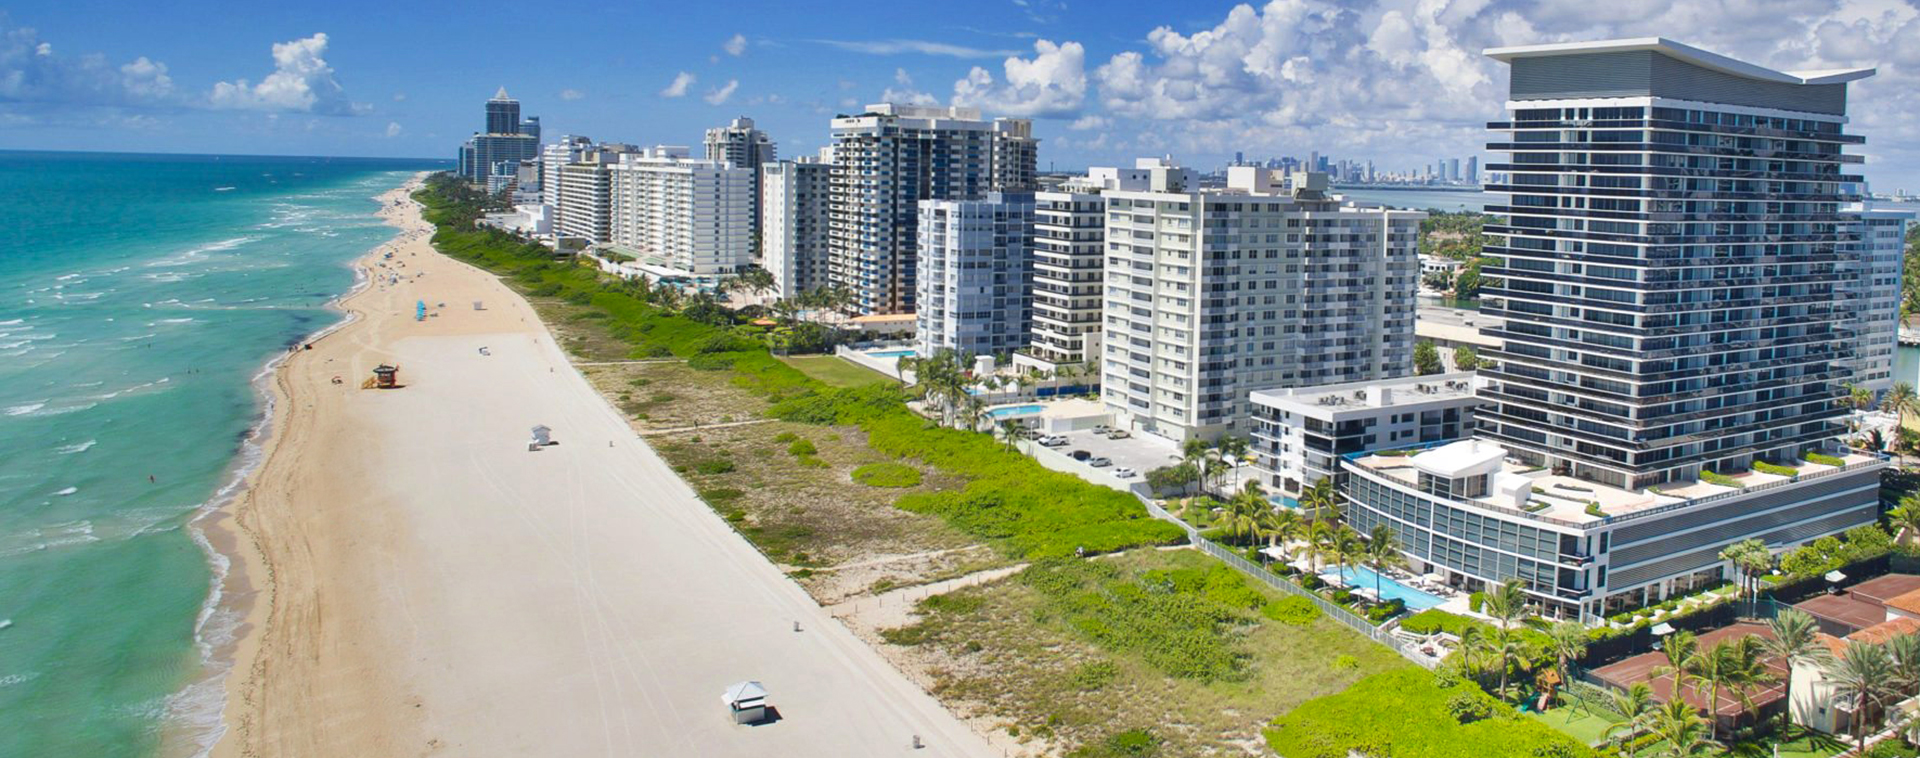 aerial image of condos on beachfront